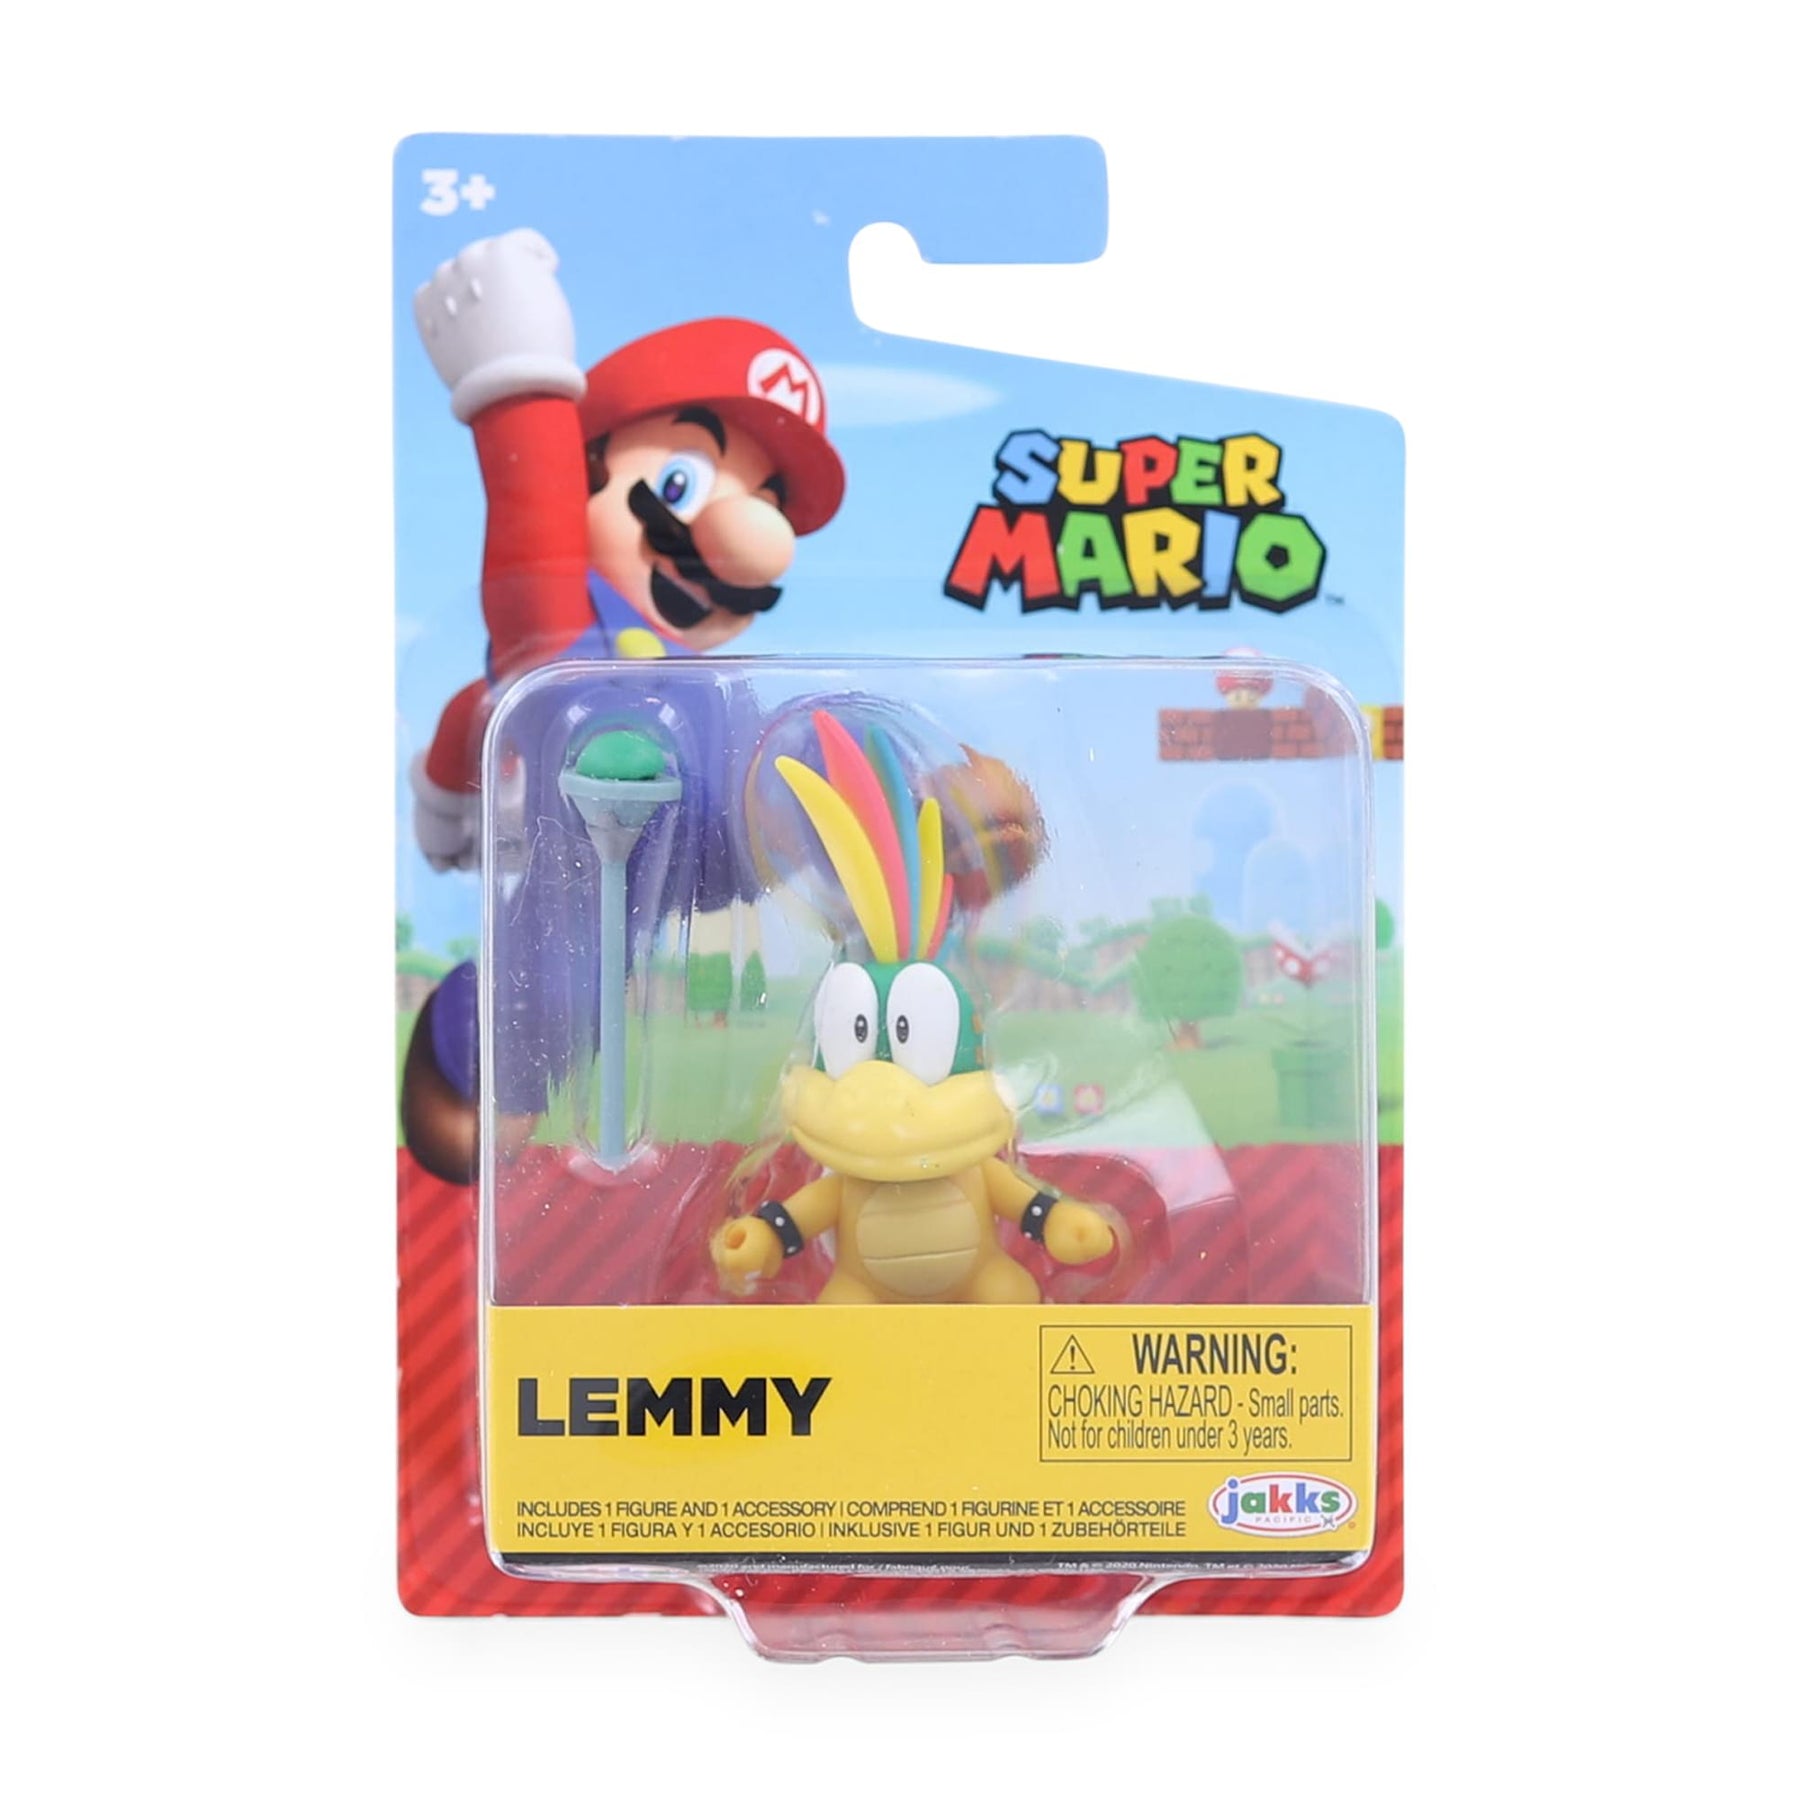 Super Mario World of Nintendo 2.5 Inch Figure | Lemmy